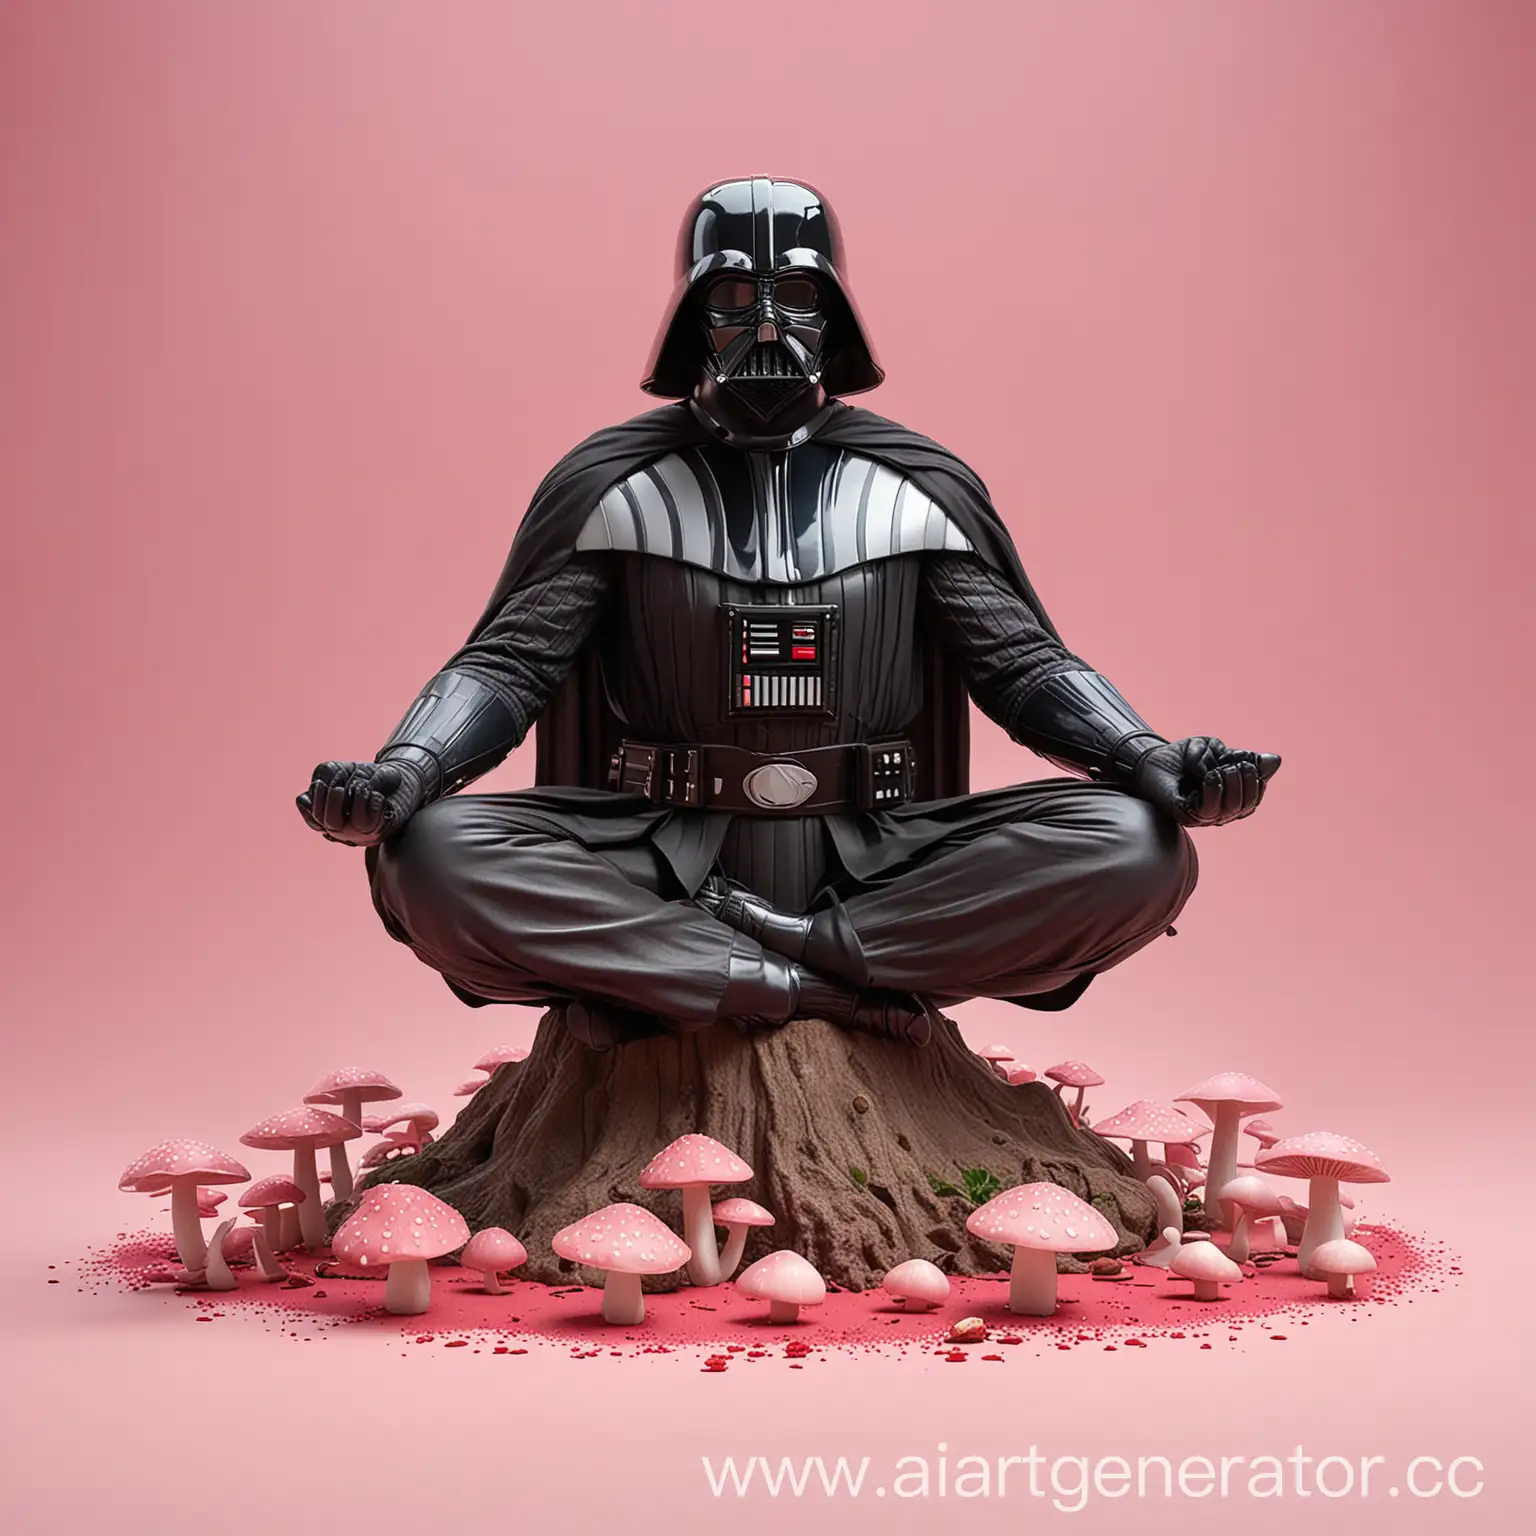 Darth-Vader-Levitating-in-Lotus-Position-Amidst-Fly-Agaric-Mushrooms